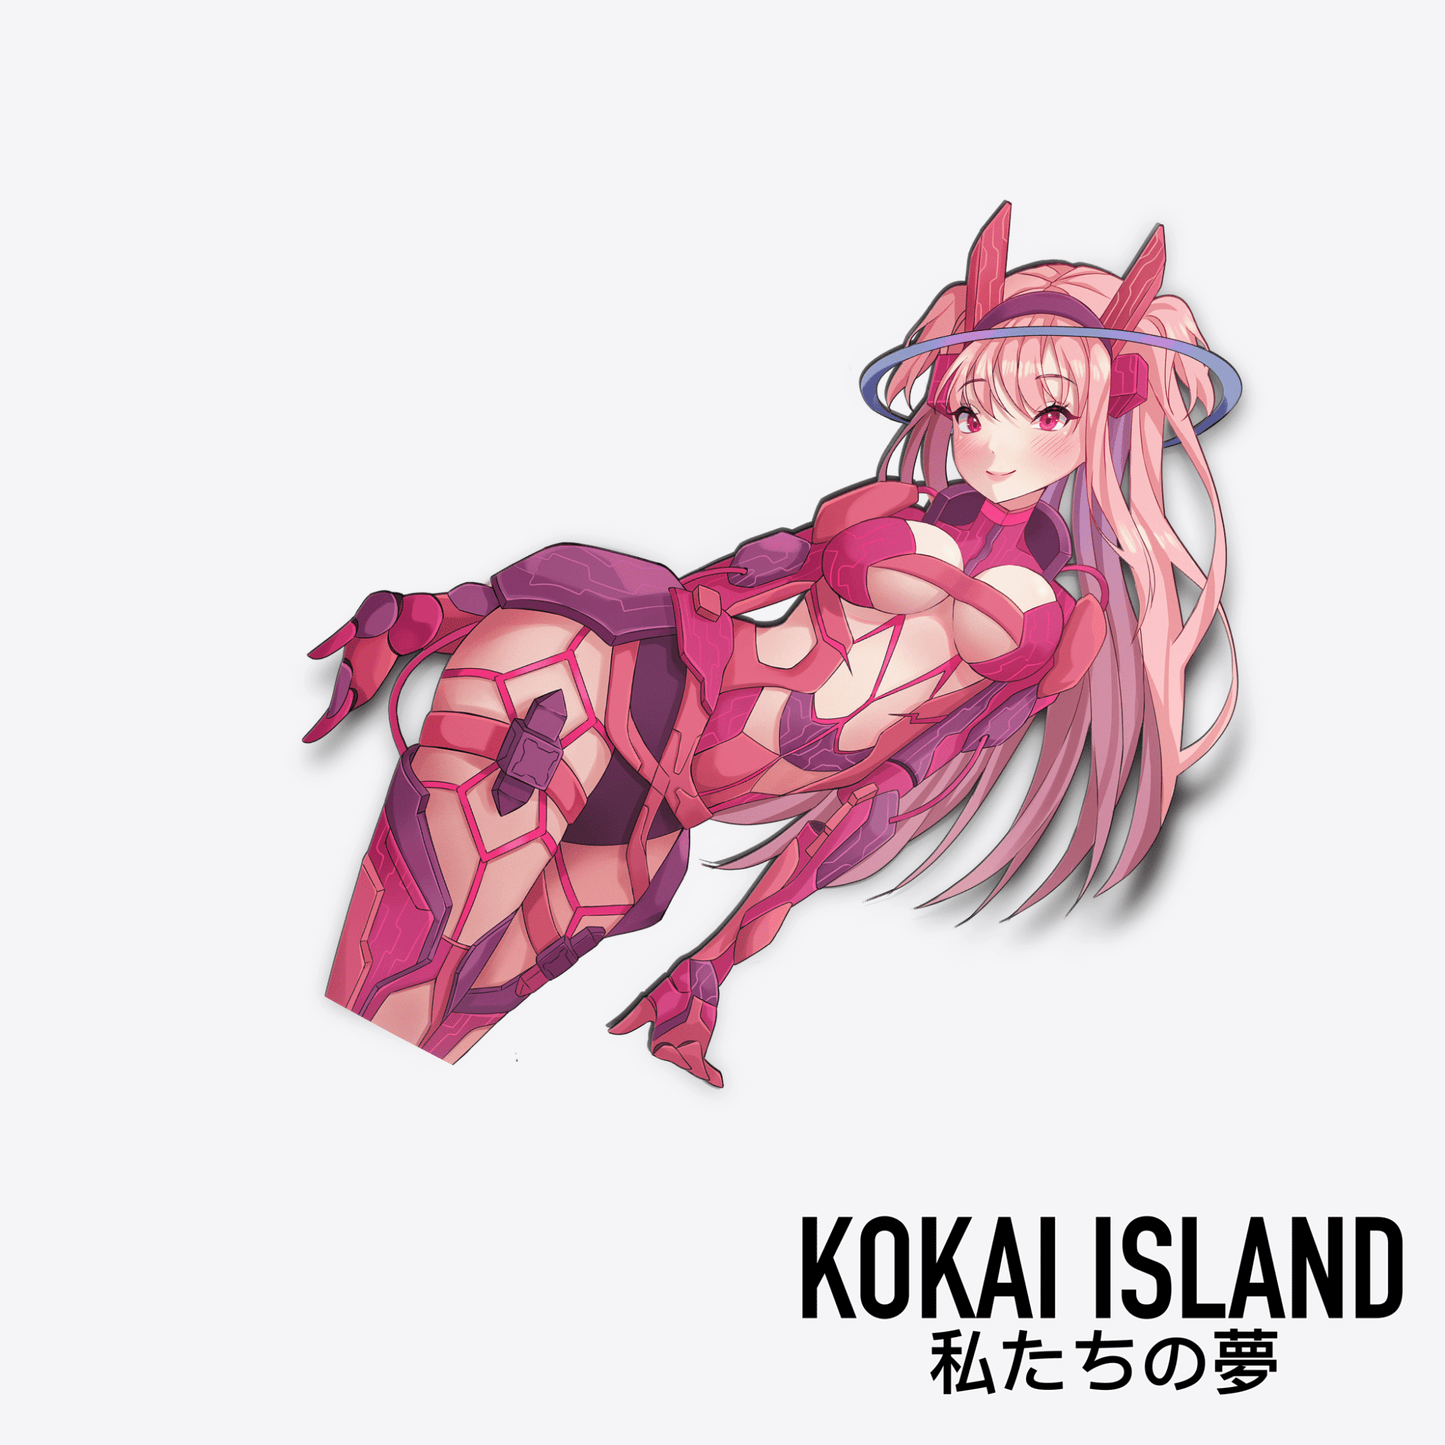 The Fiery Rose Stellar Kai DecalDecalKokai Island